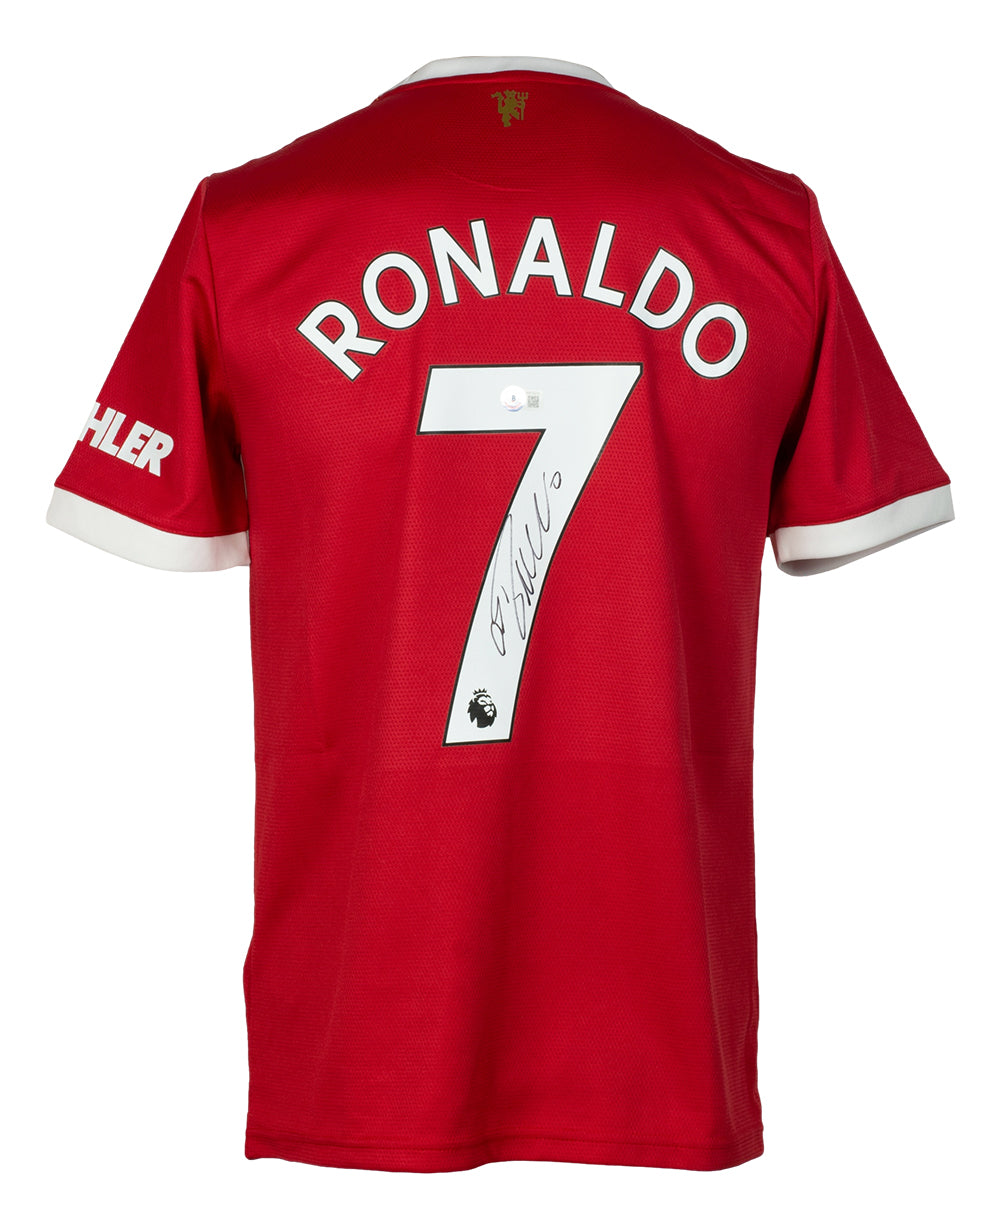 ronaldo signed jersey manchester united